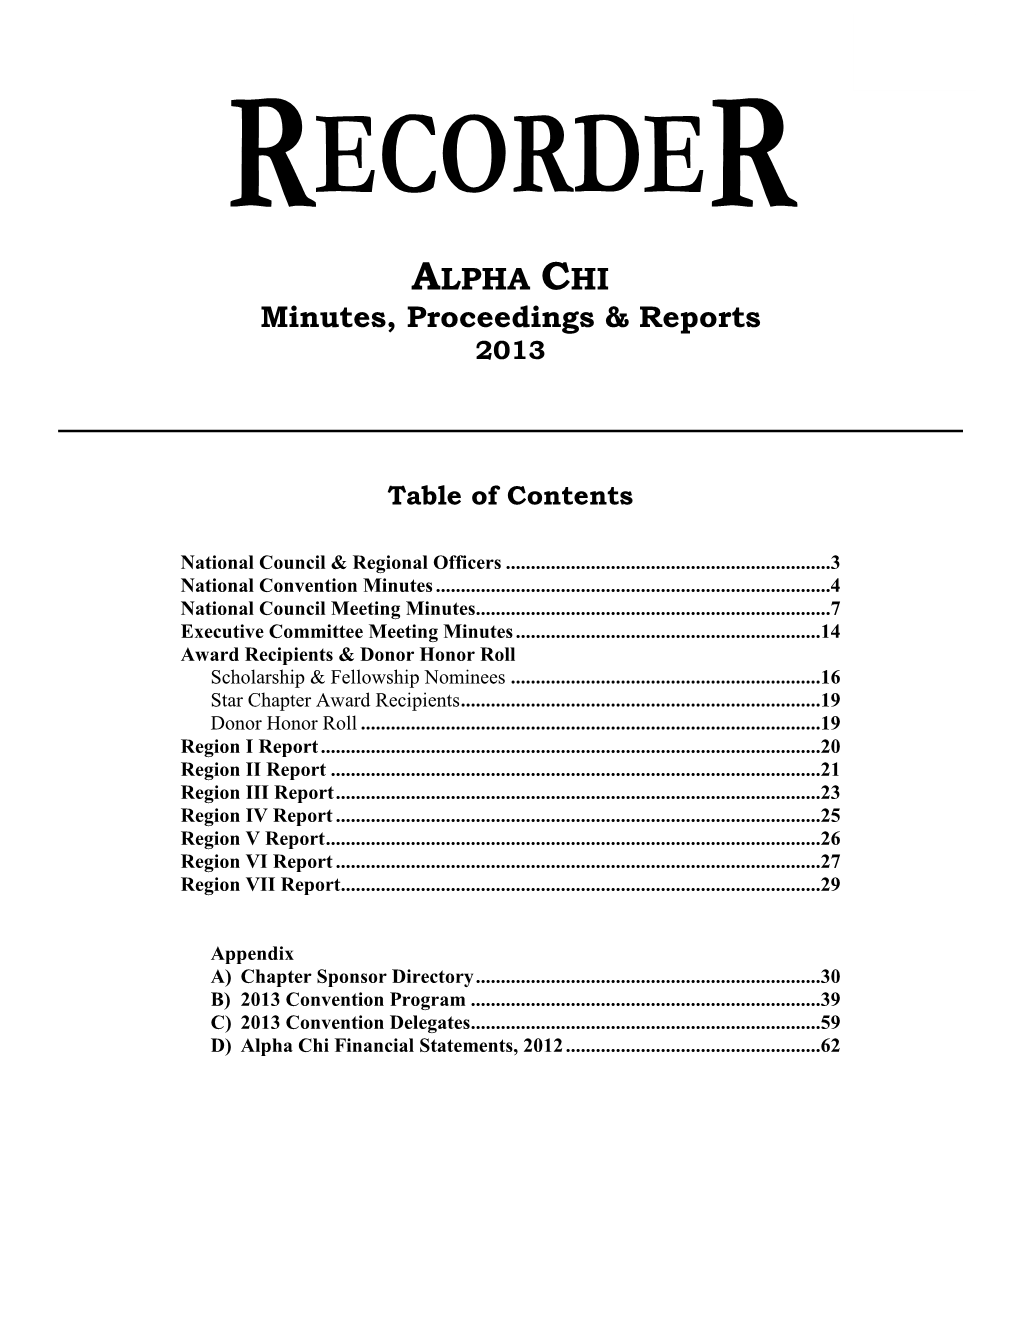 ALPHA CHI Minutes, Proceedings & Reports 2013